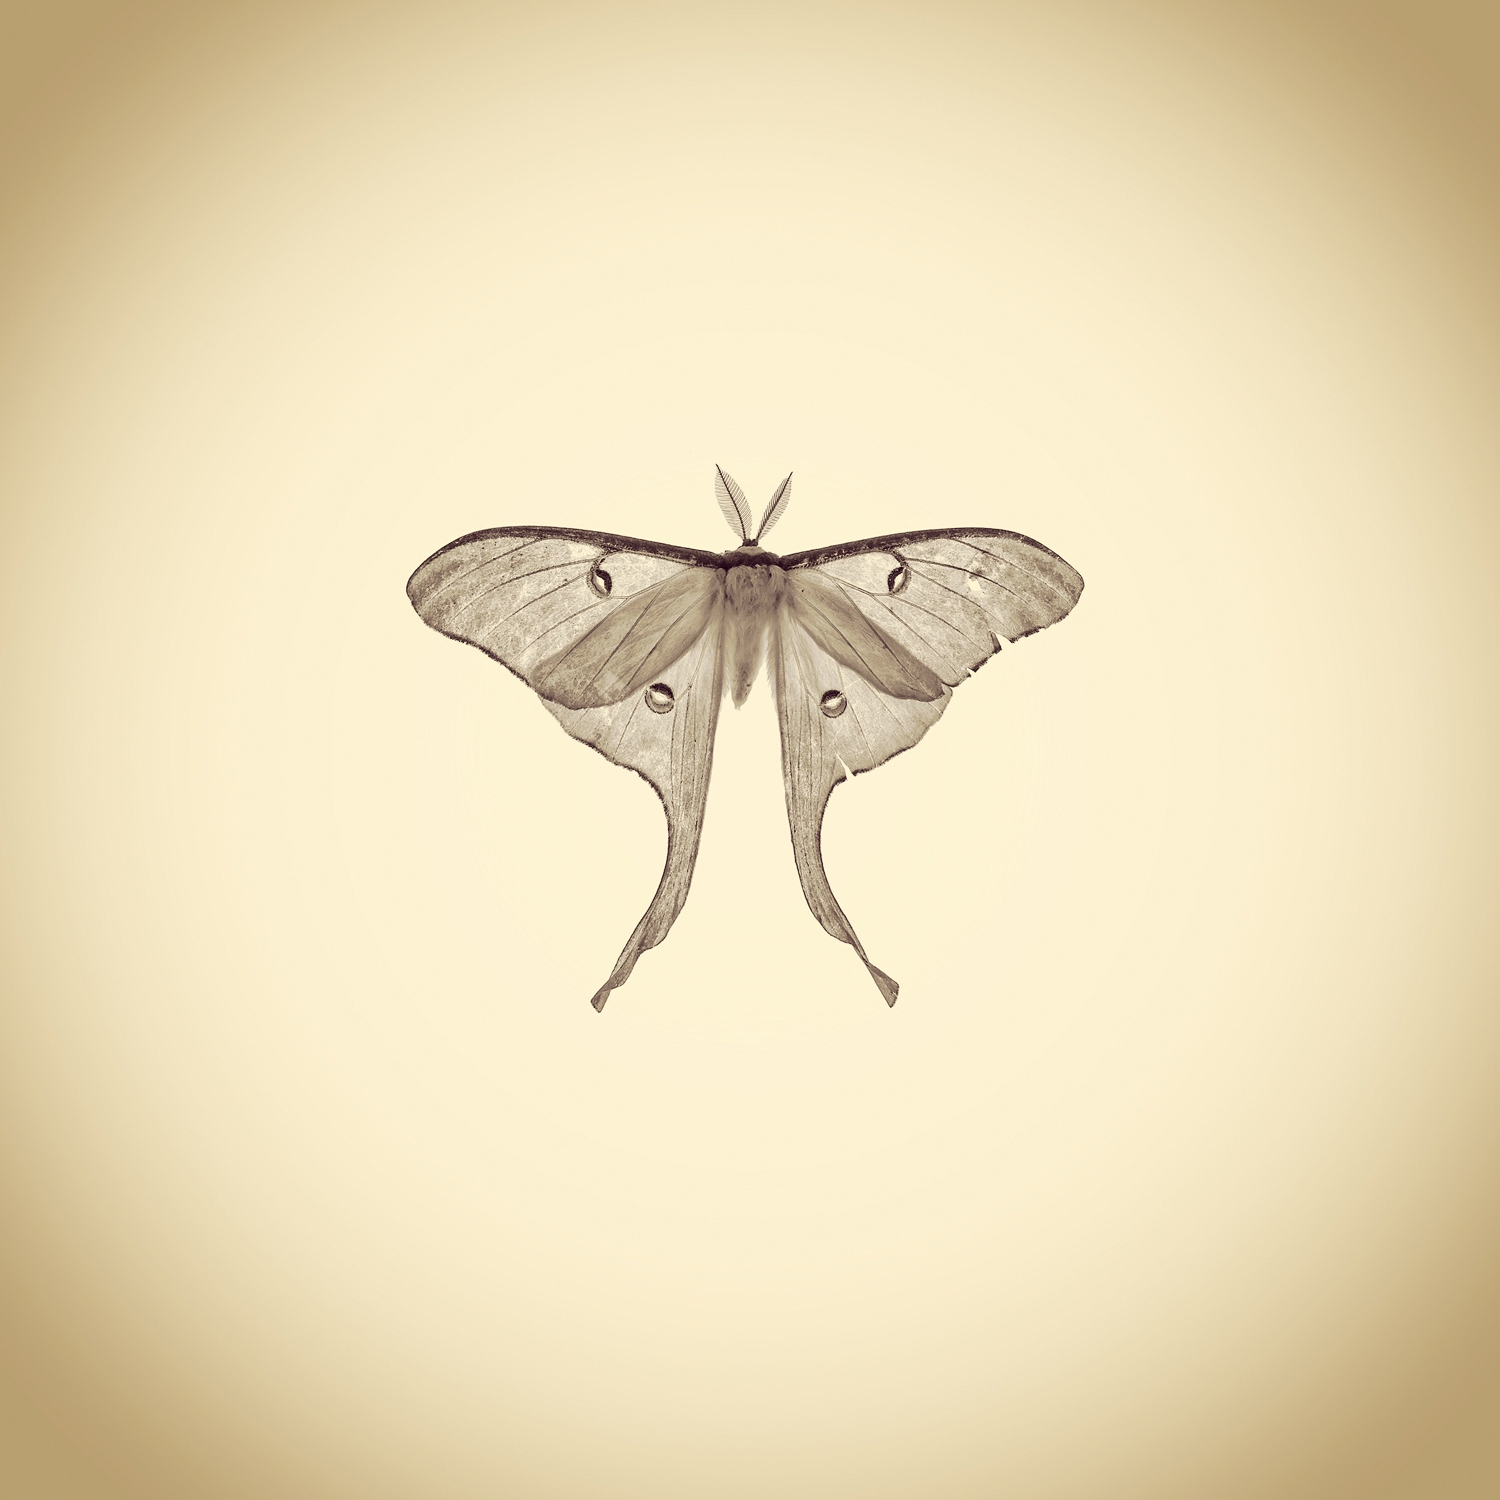 Joshua White, Luna Moth, Actias Luna, 2015. Cell phone capture, archival digital print, 4¼ x 4¼ inches. Courtesy of the artist